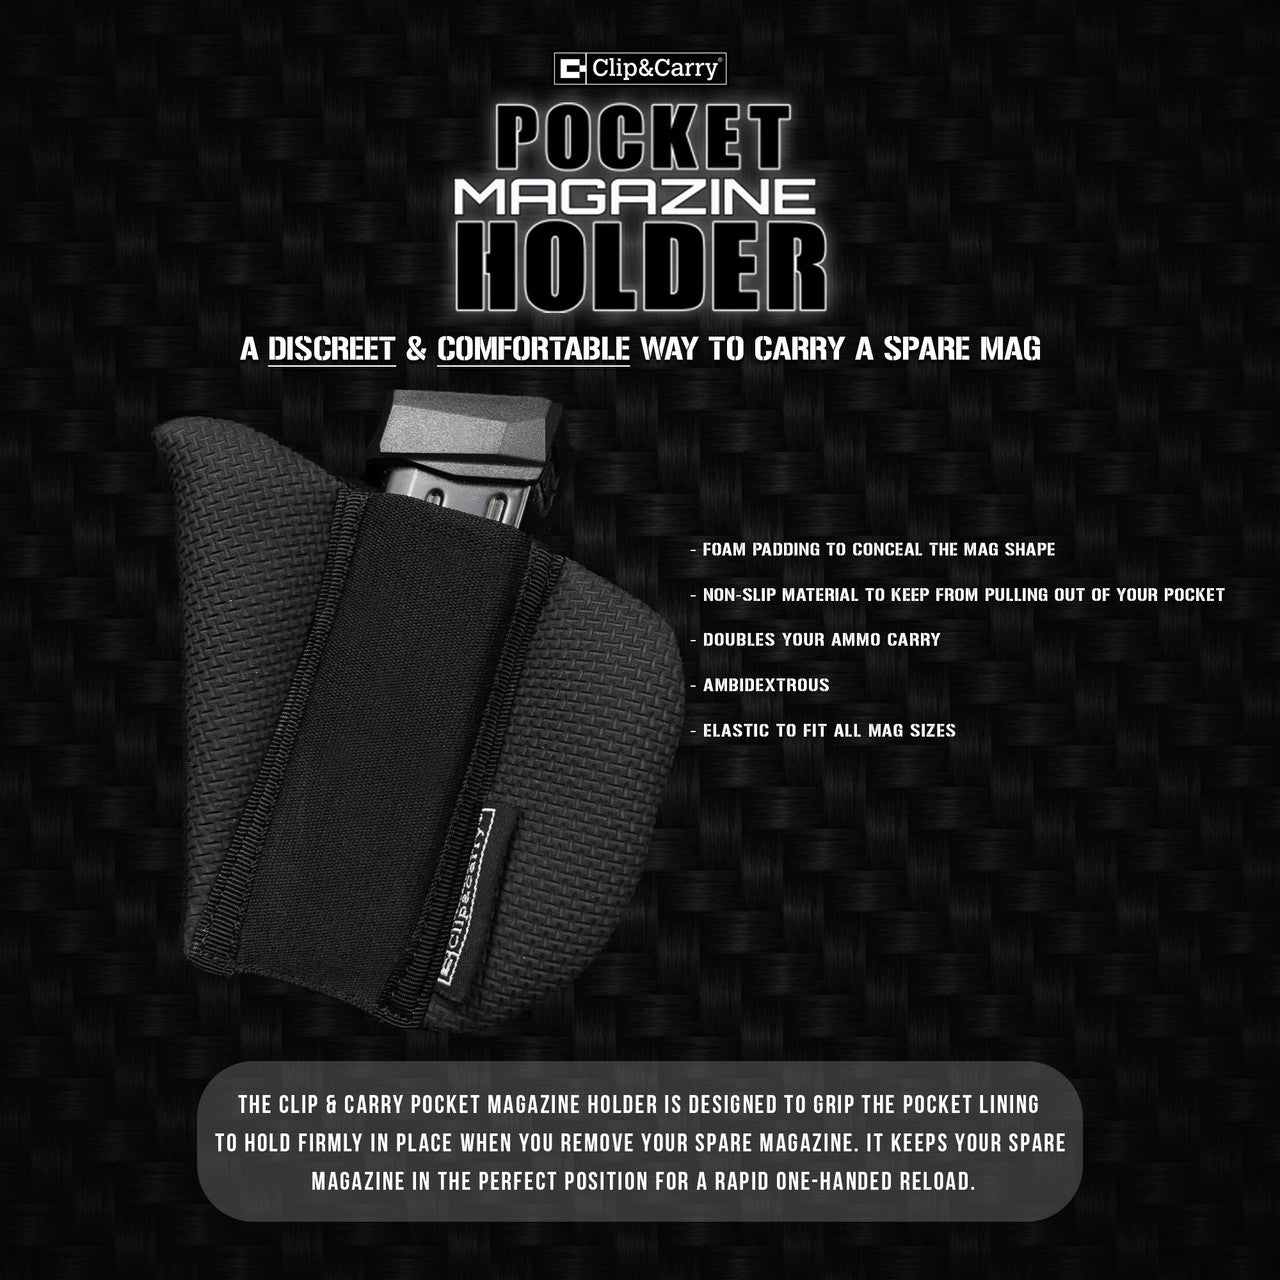 Pocket Magazine Holder Clip & Carry